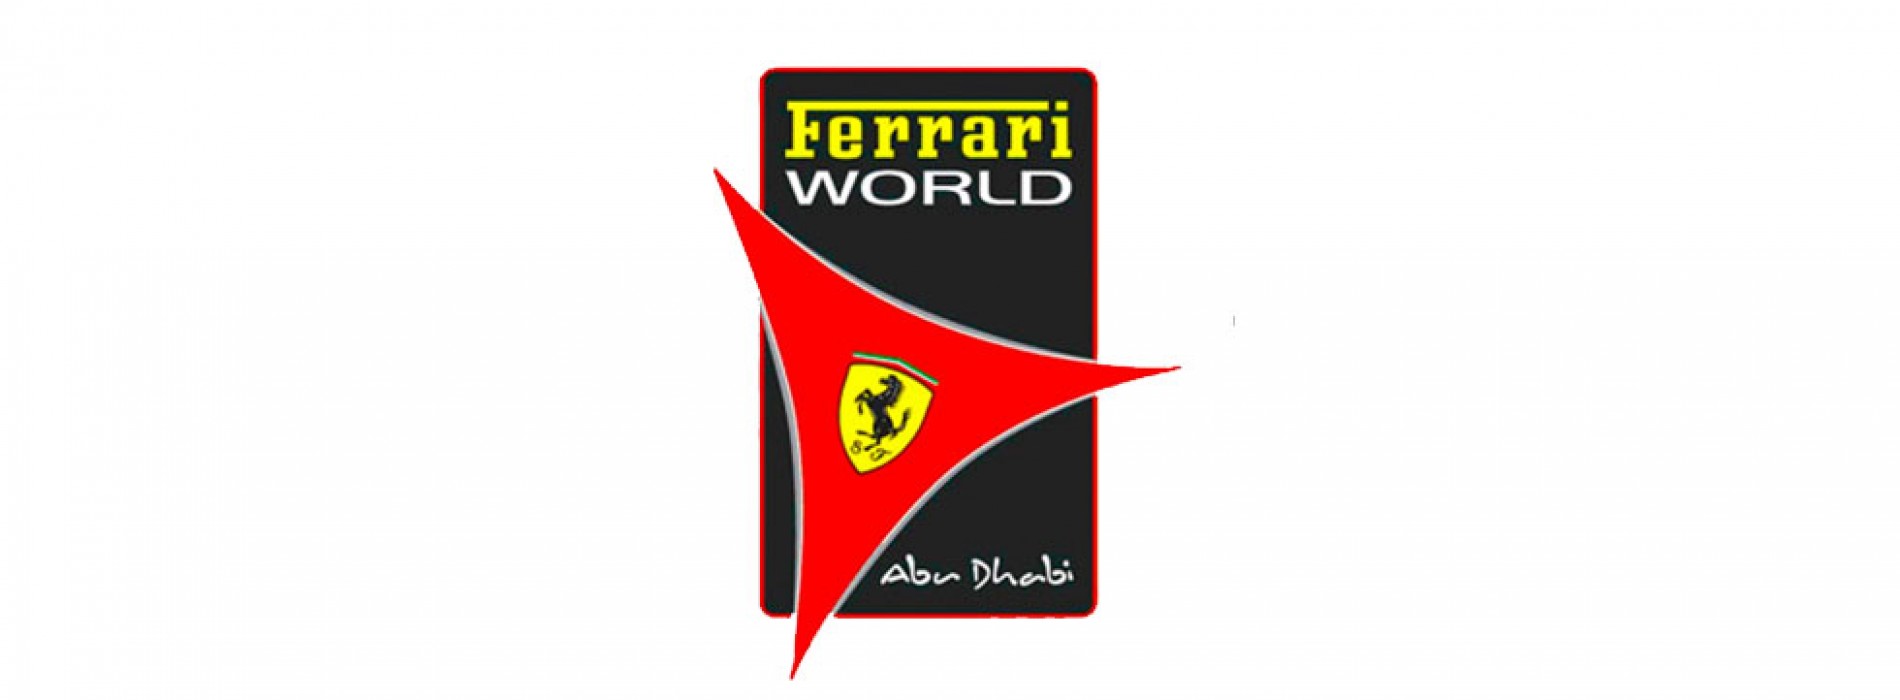 Ferrari World Abu Dhabi Spreads the Ferrari Spirit to Public this Ramadan